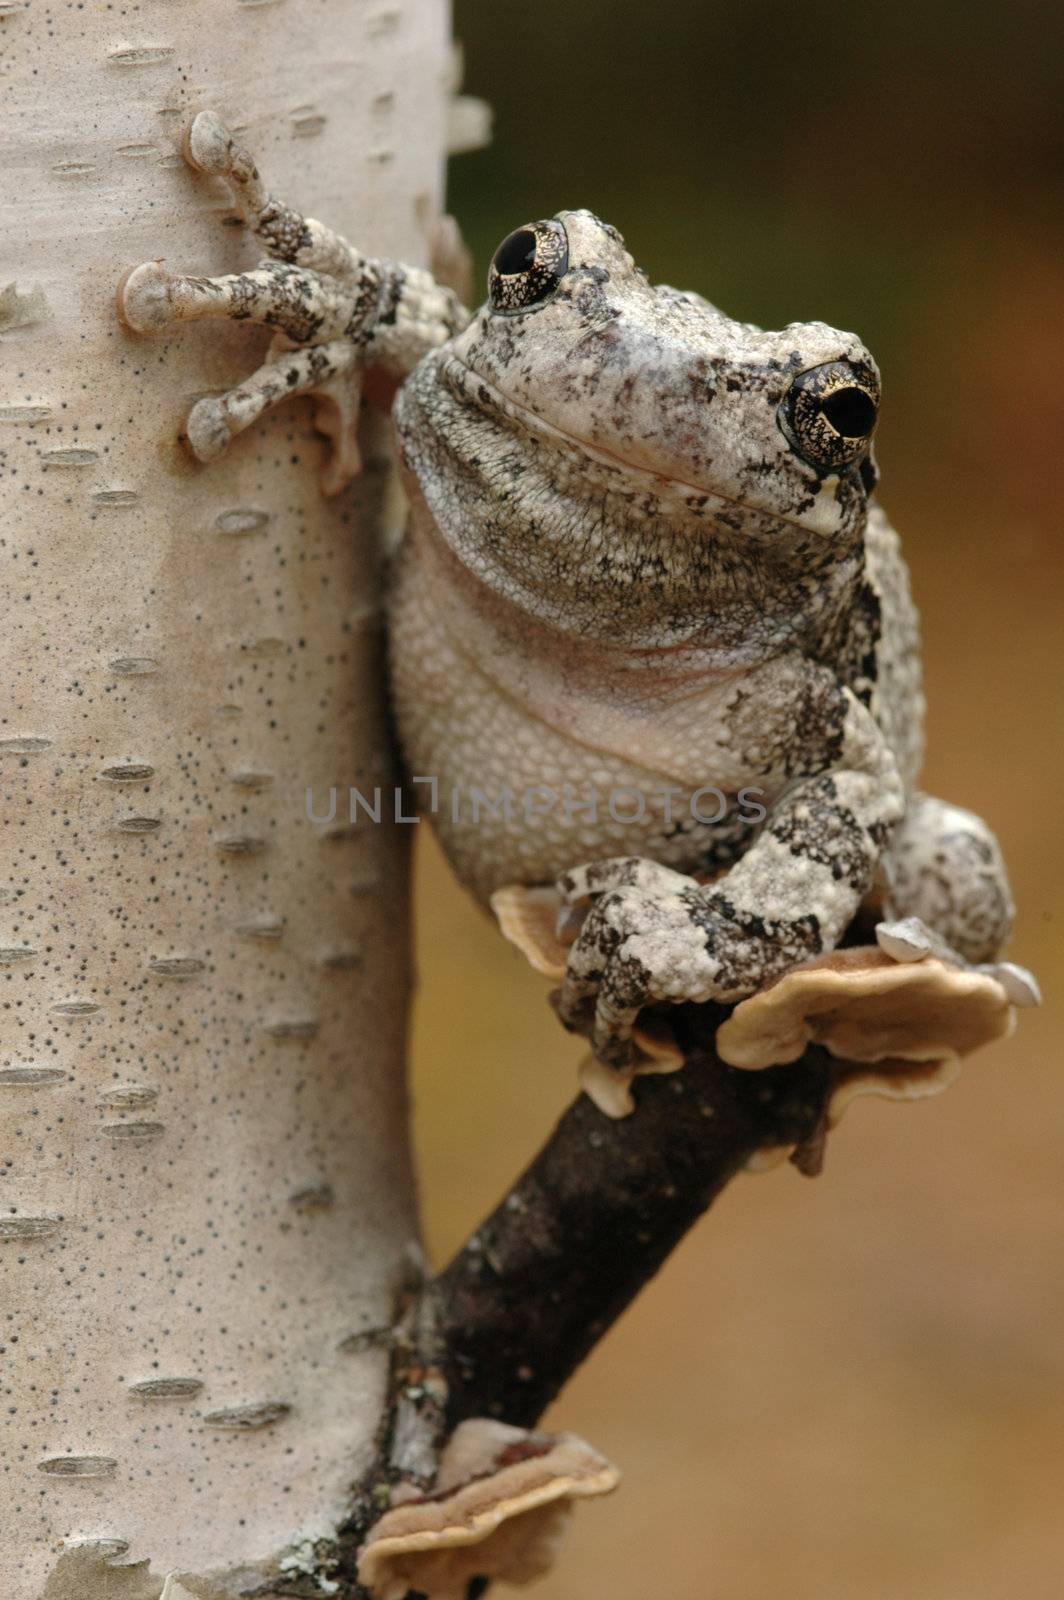 Grey tree frog (Hyla versicolor) by donya_nedomam